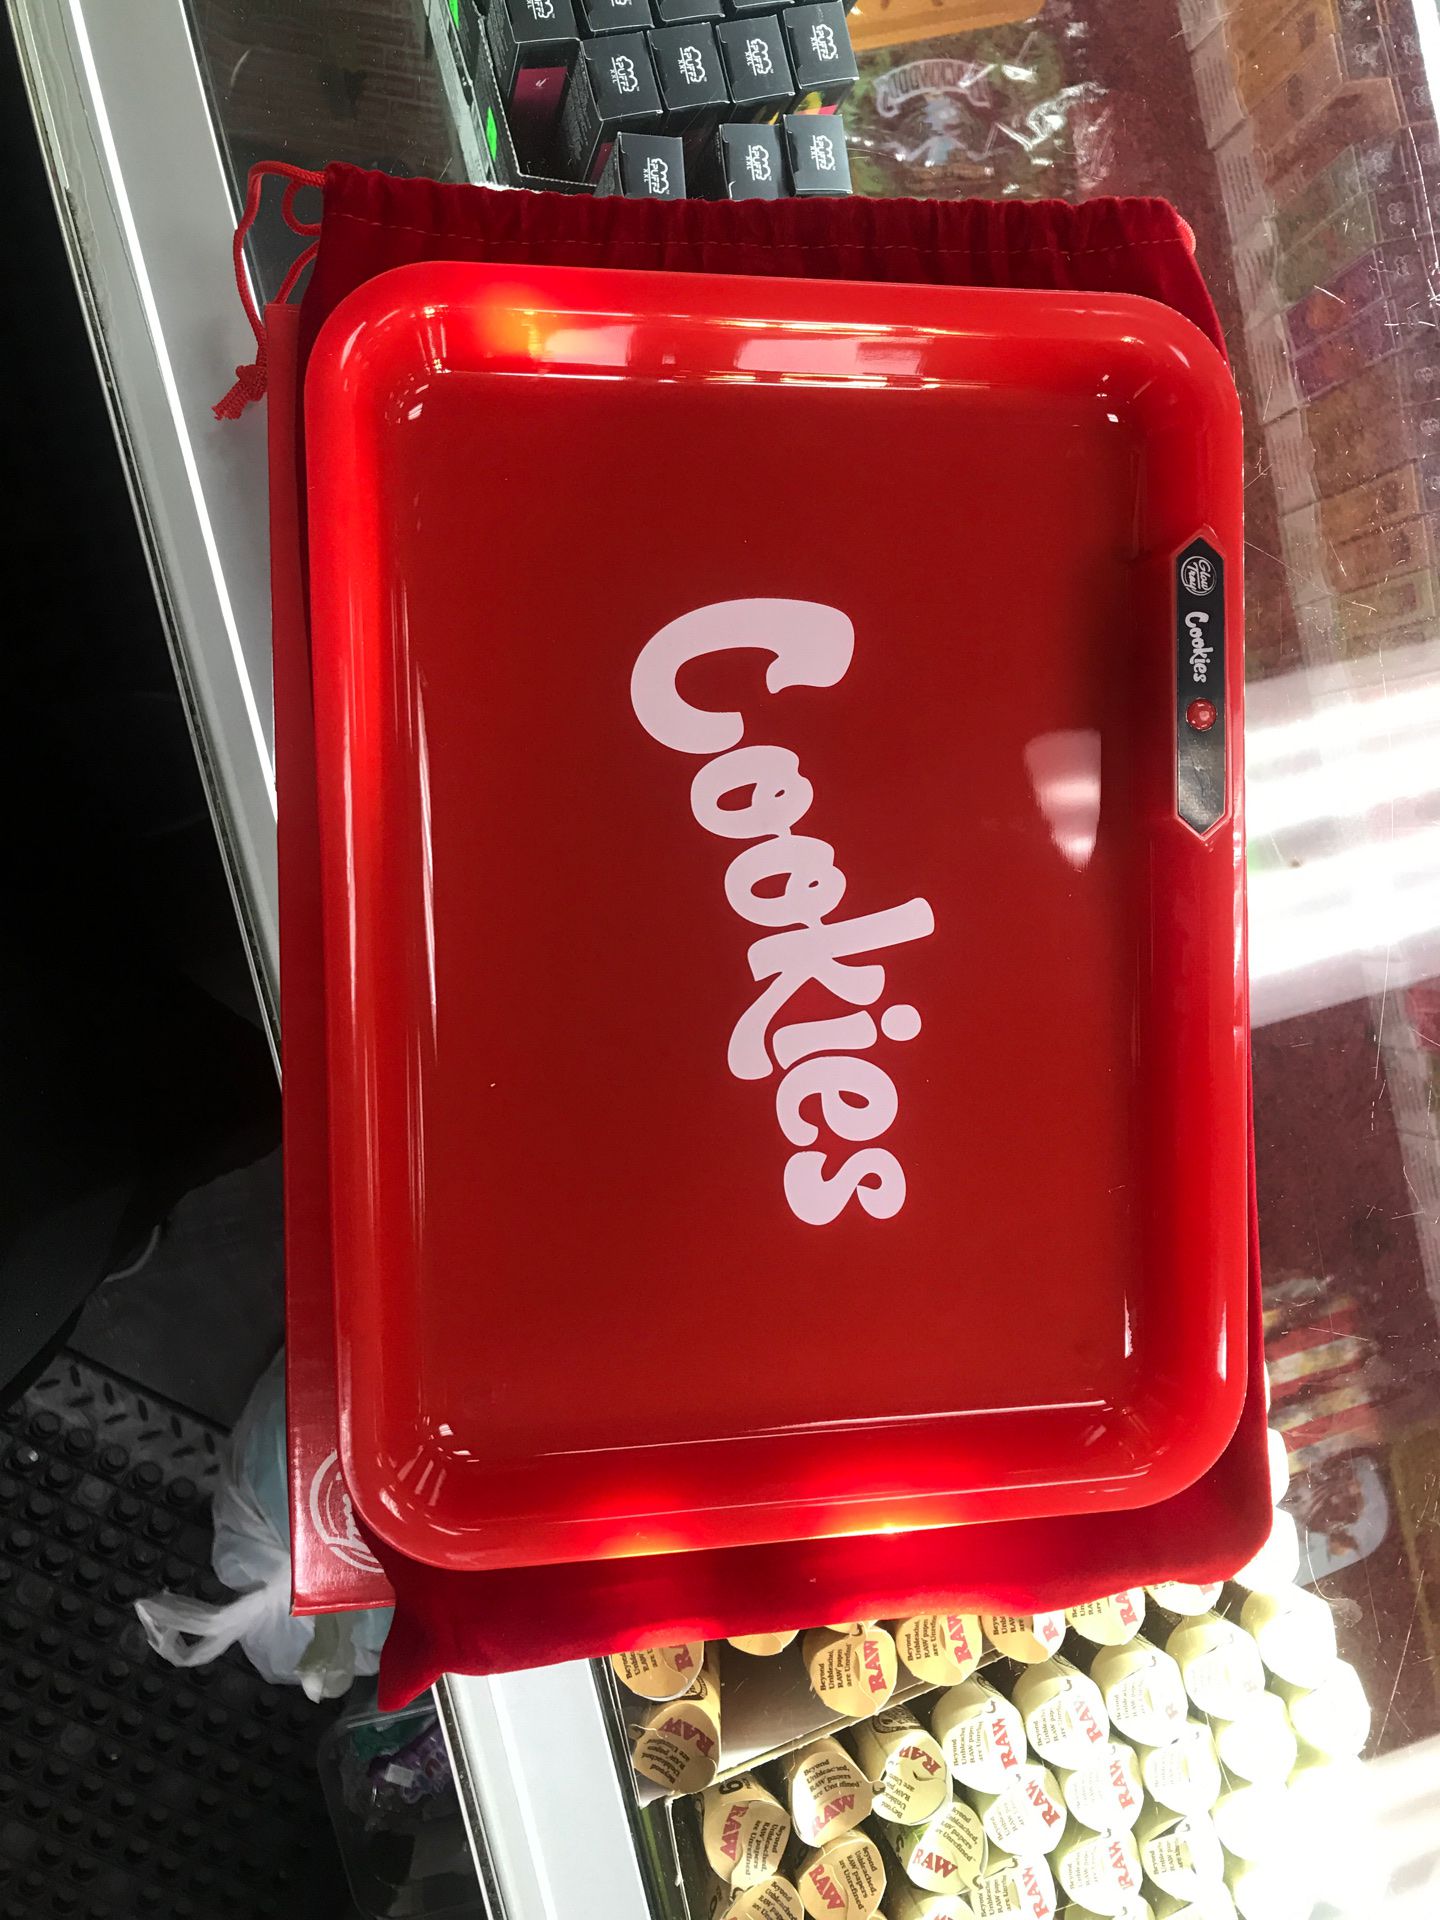 Cookies trays